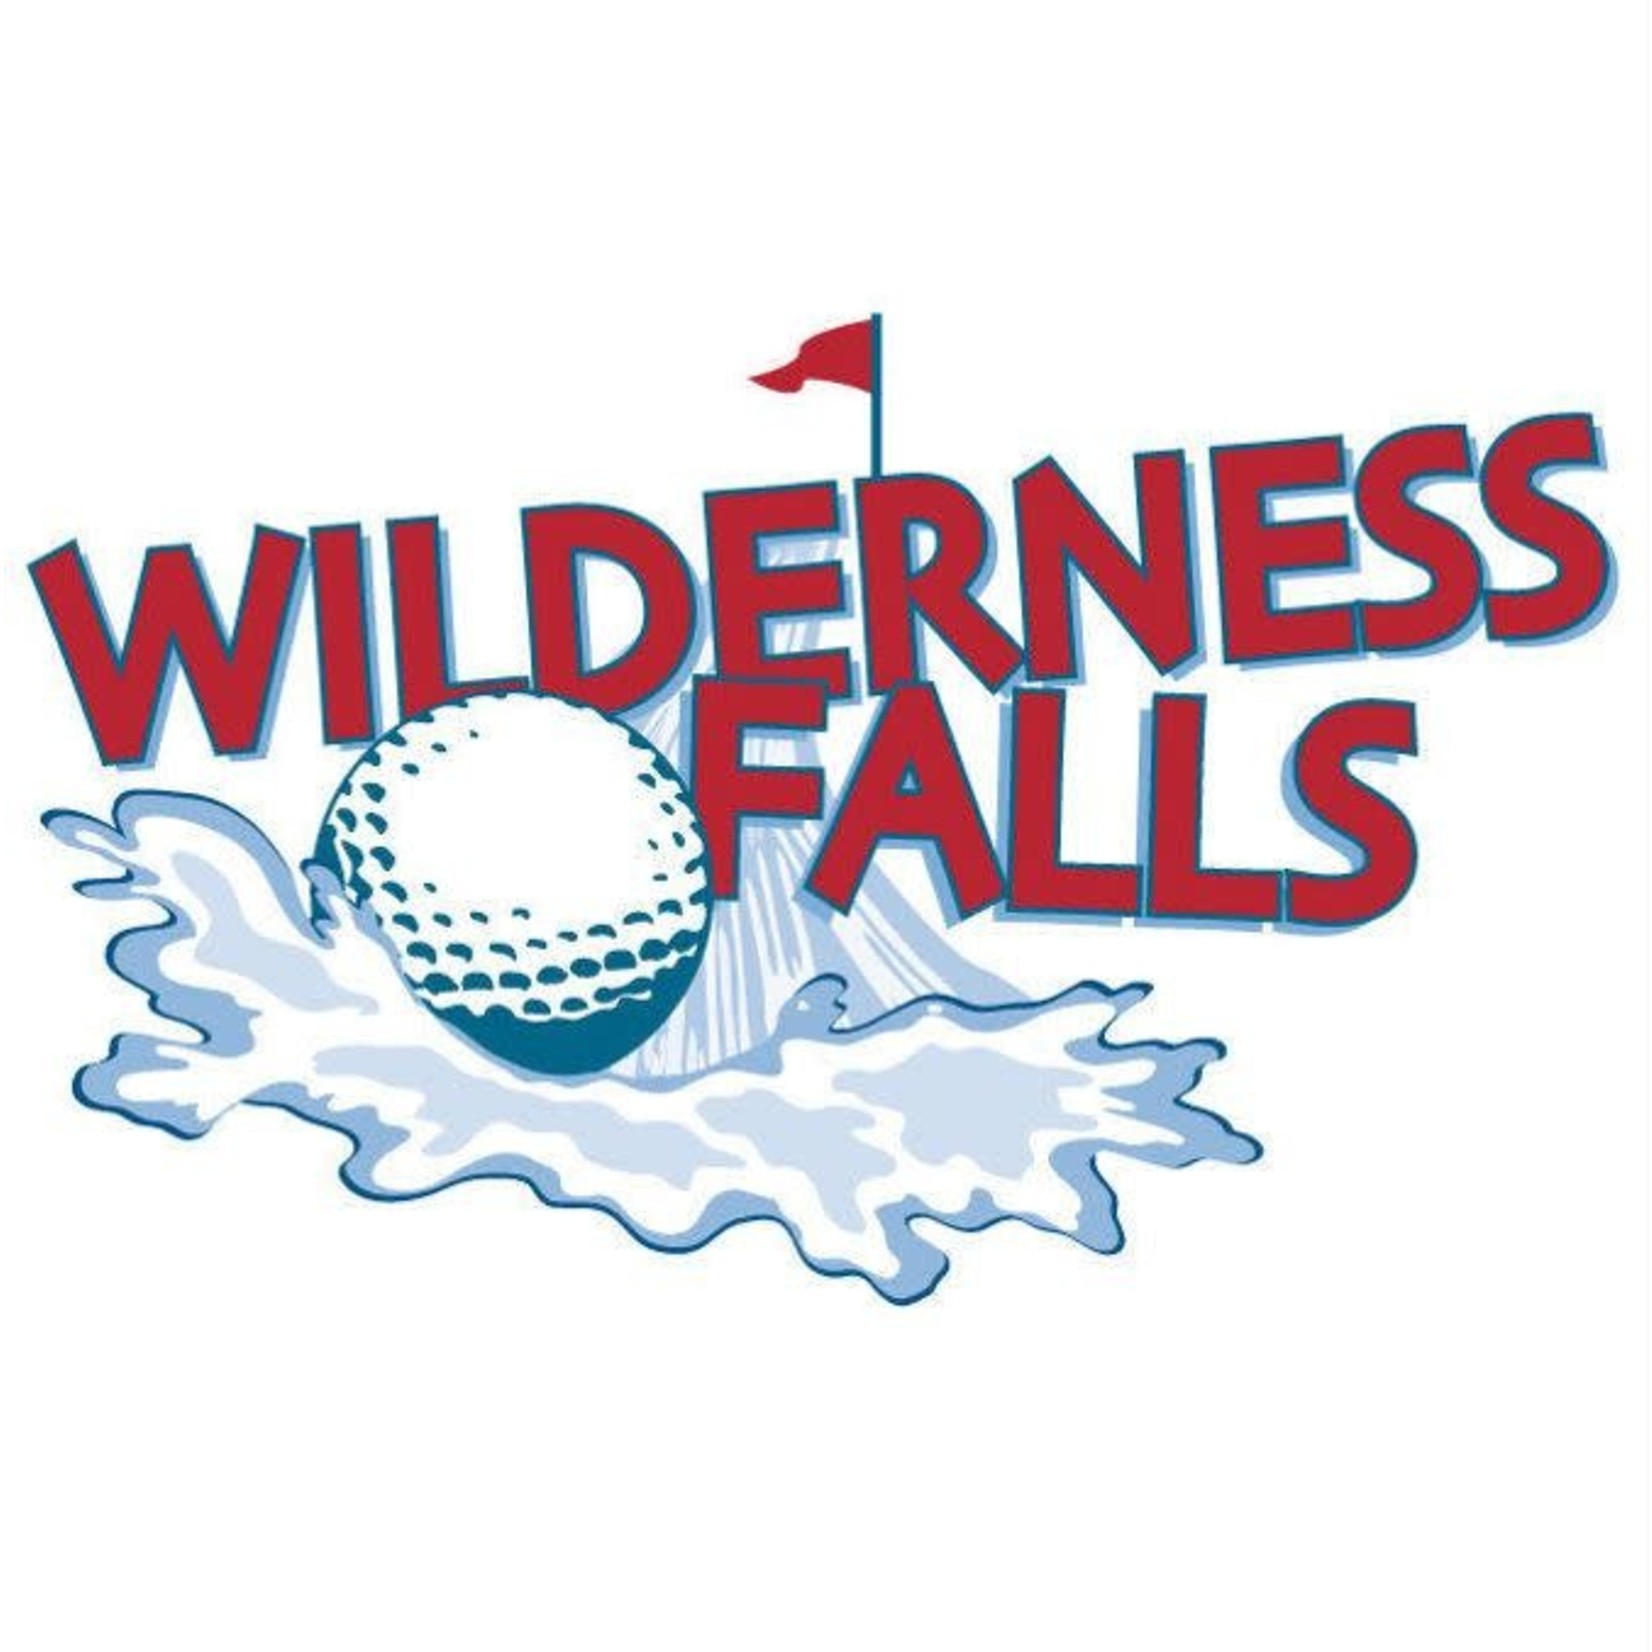 Wilderness Falls, Inc.-Bolingbrook Wilderness Falls, Inc.-Bolingbrook $40.00 Batting Cage Punch Card